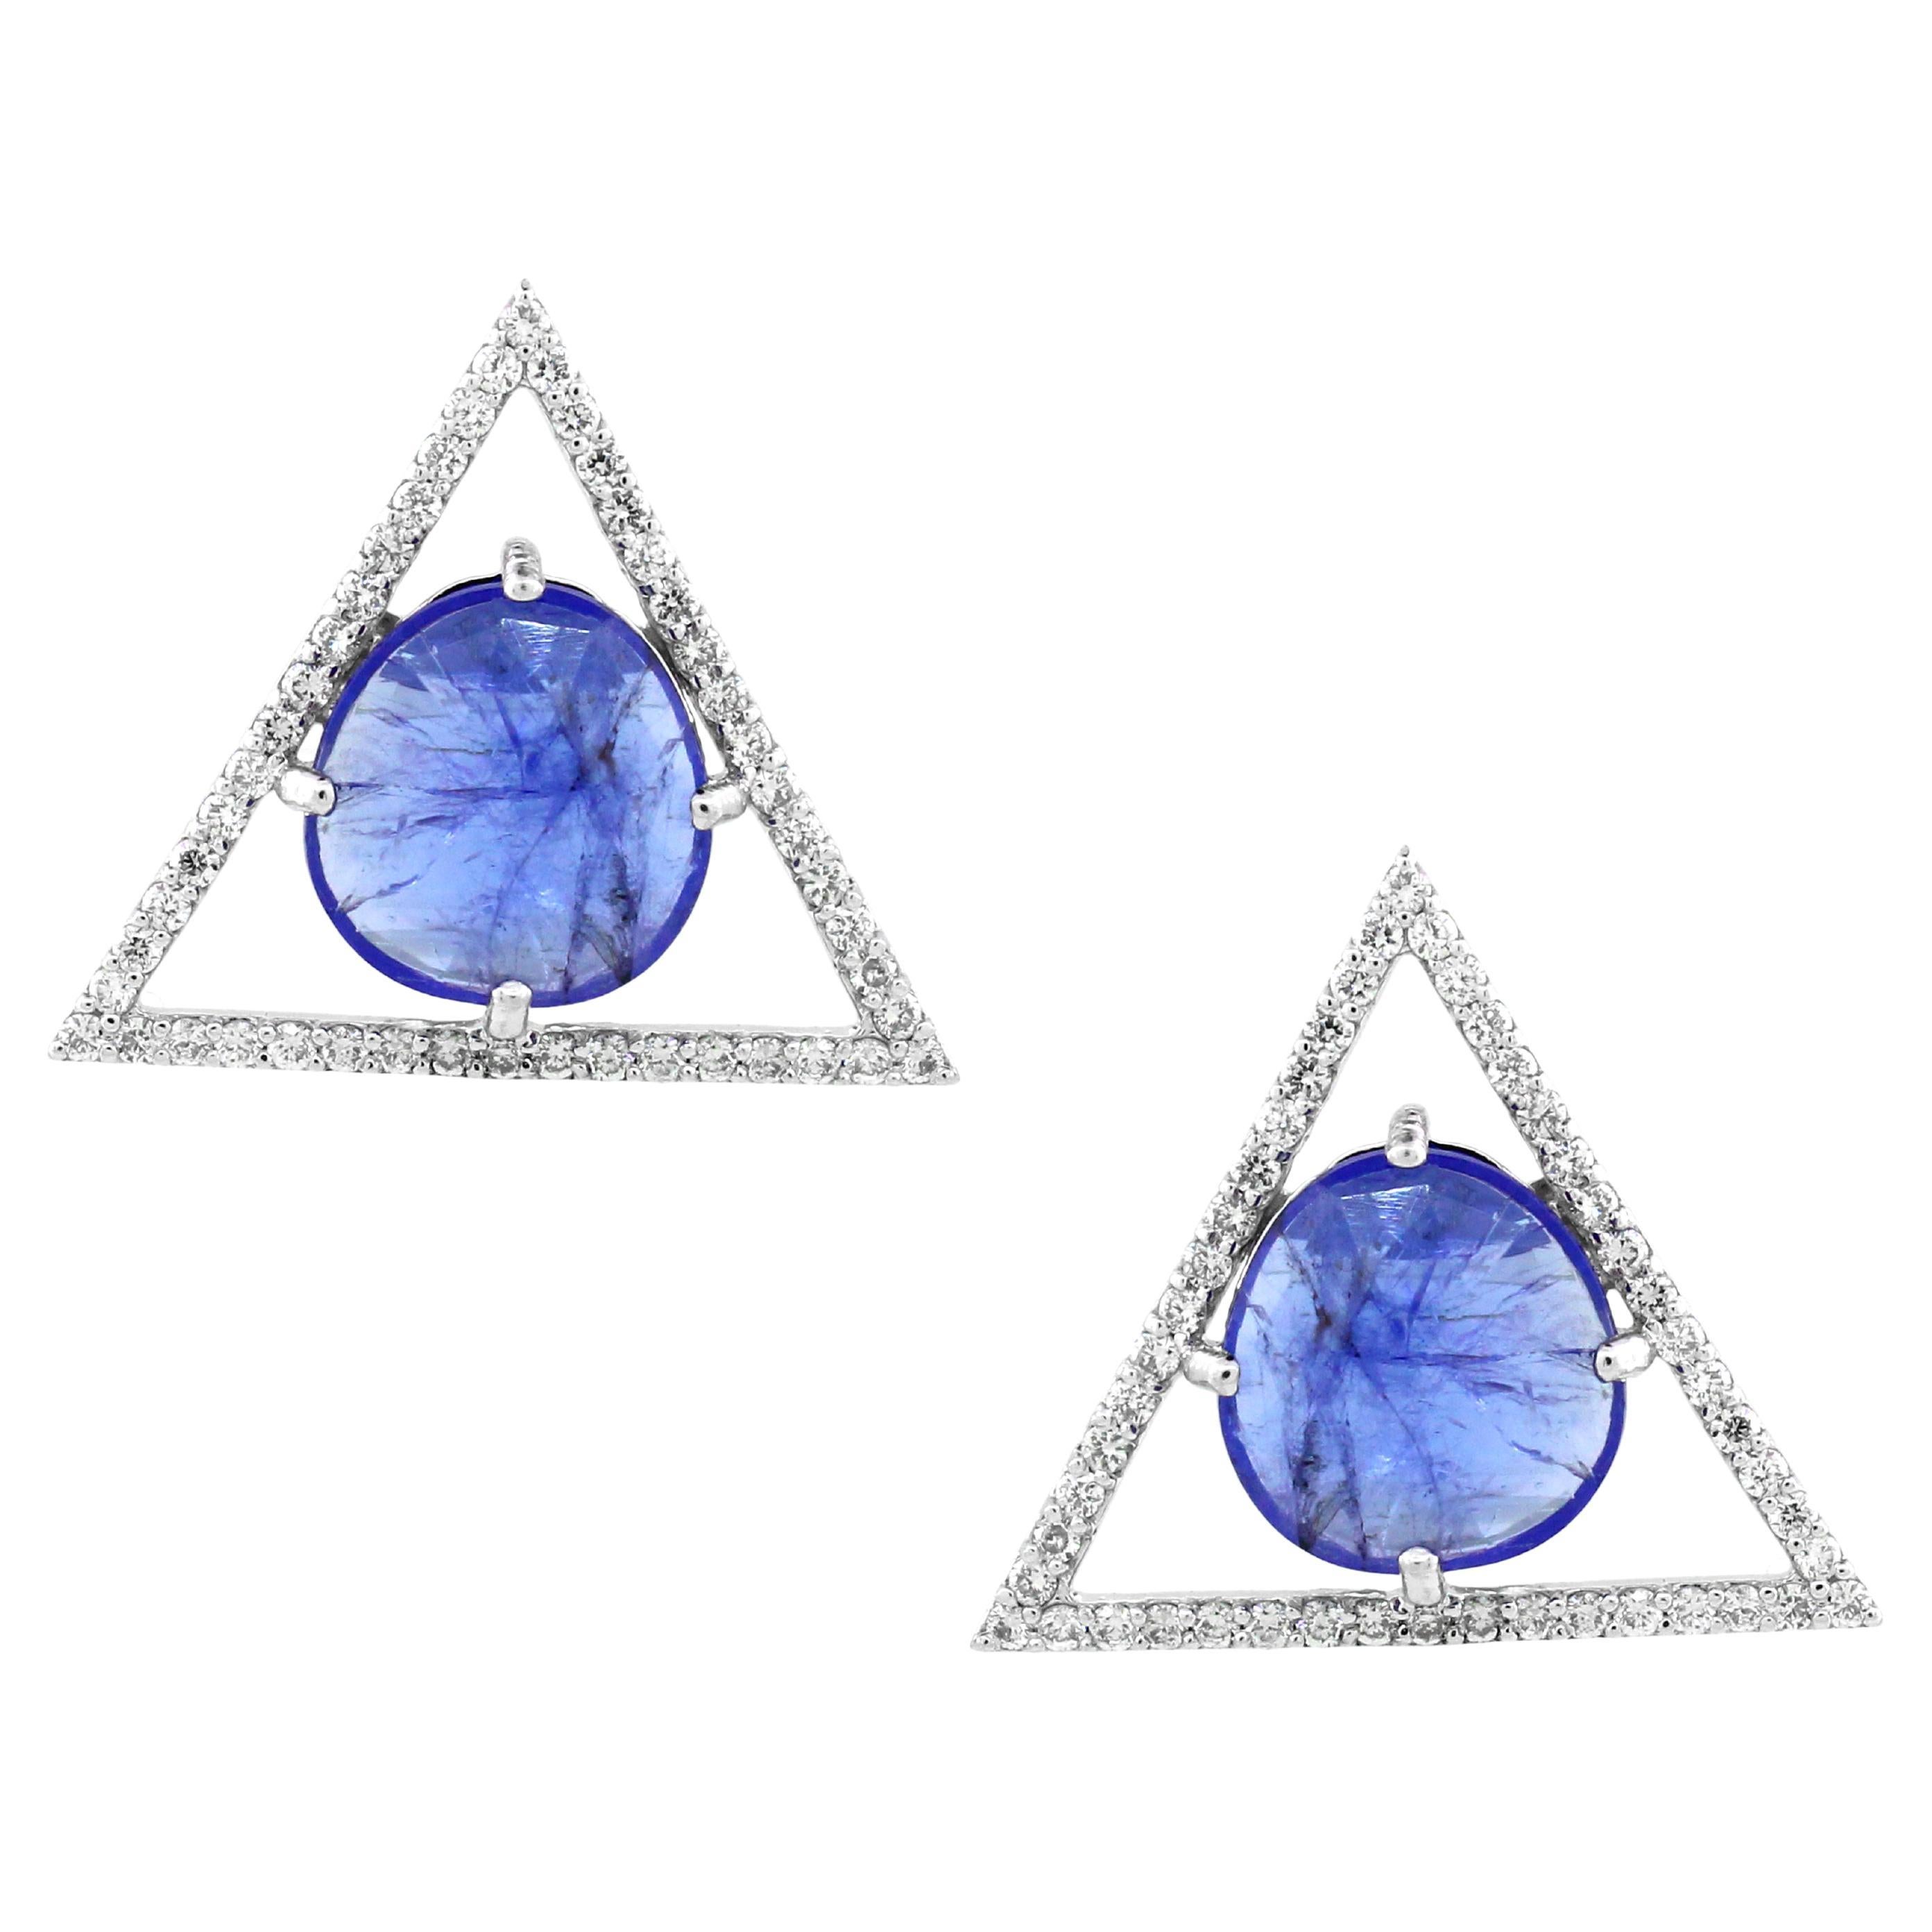 5.82 carats of Tanzanite Stud Earrings